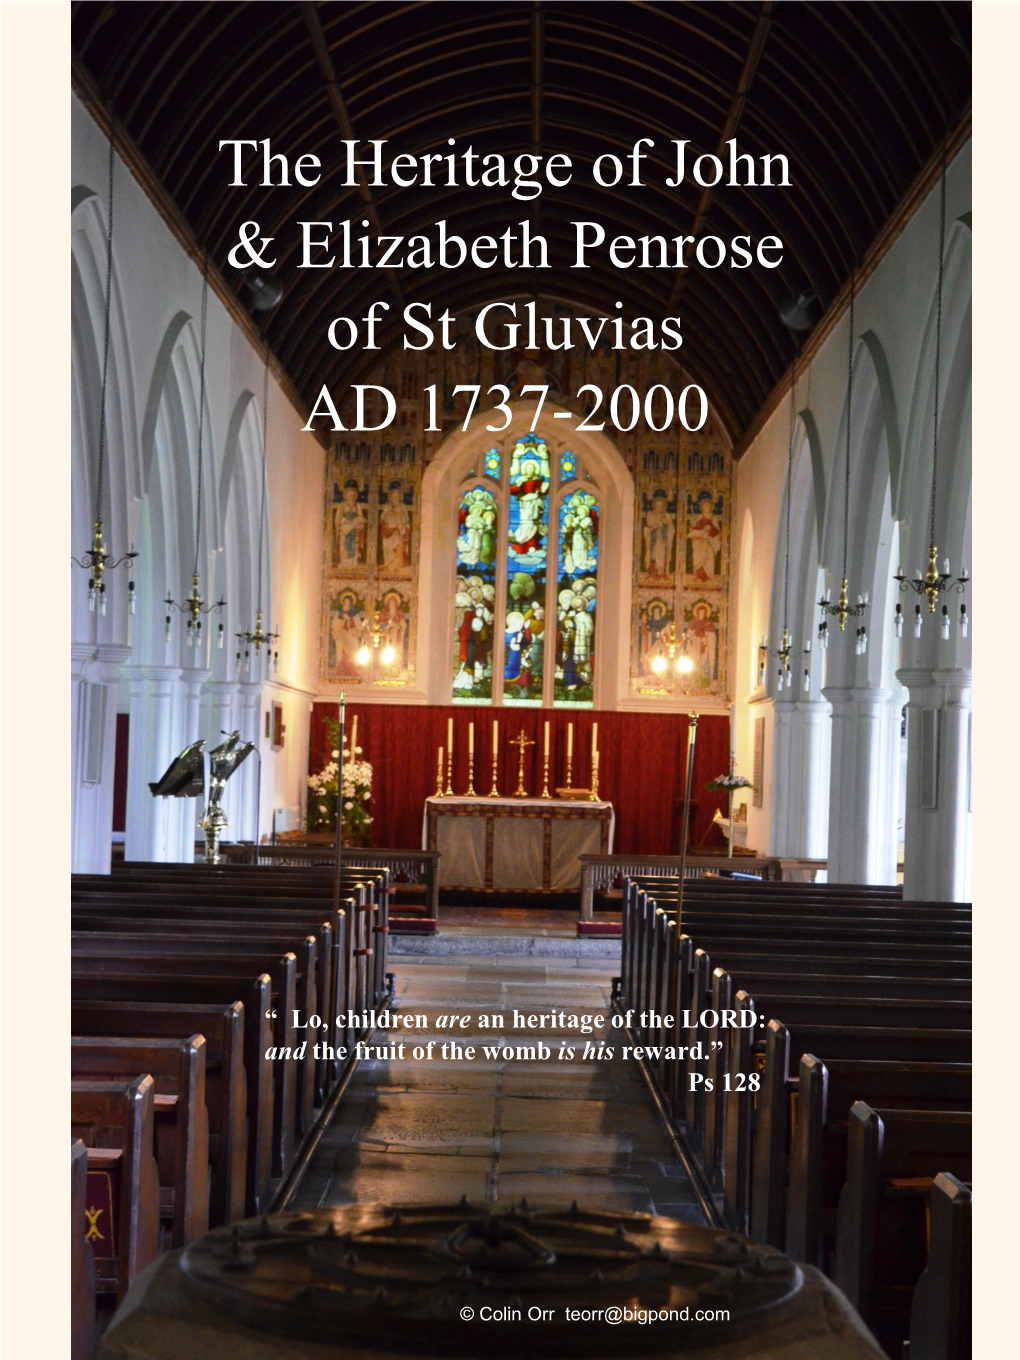 The Heritage of John & Elizabeth Penrose of St Gluvias AD 1737-2000